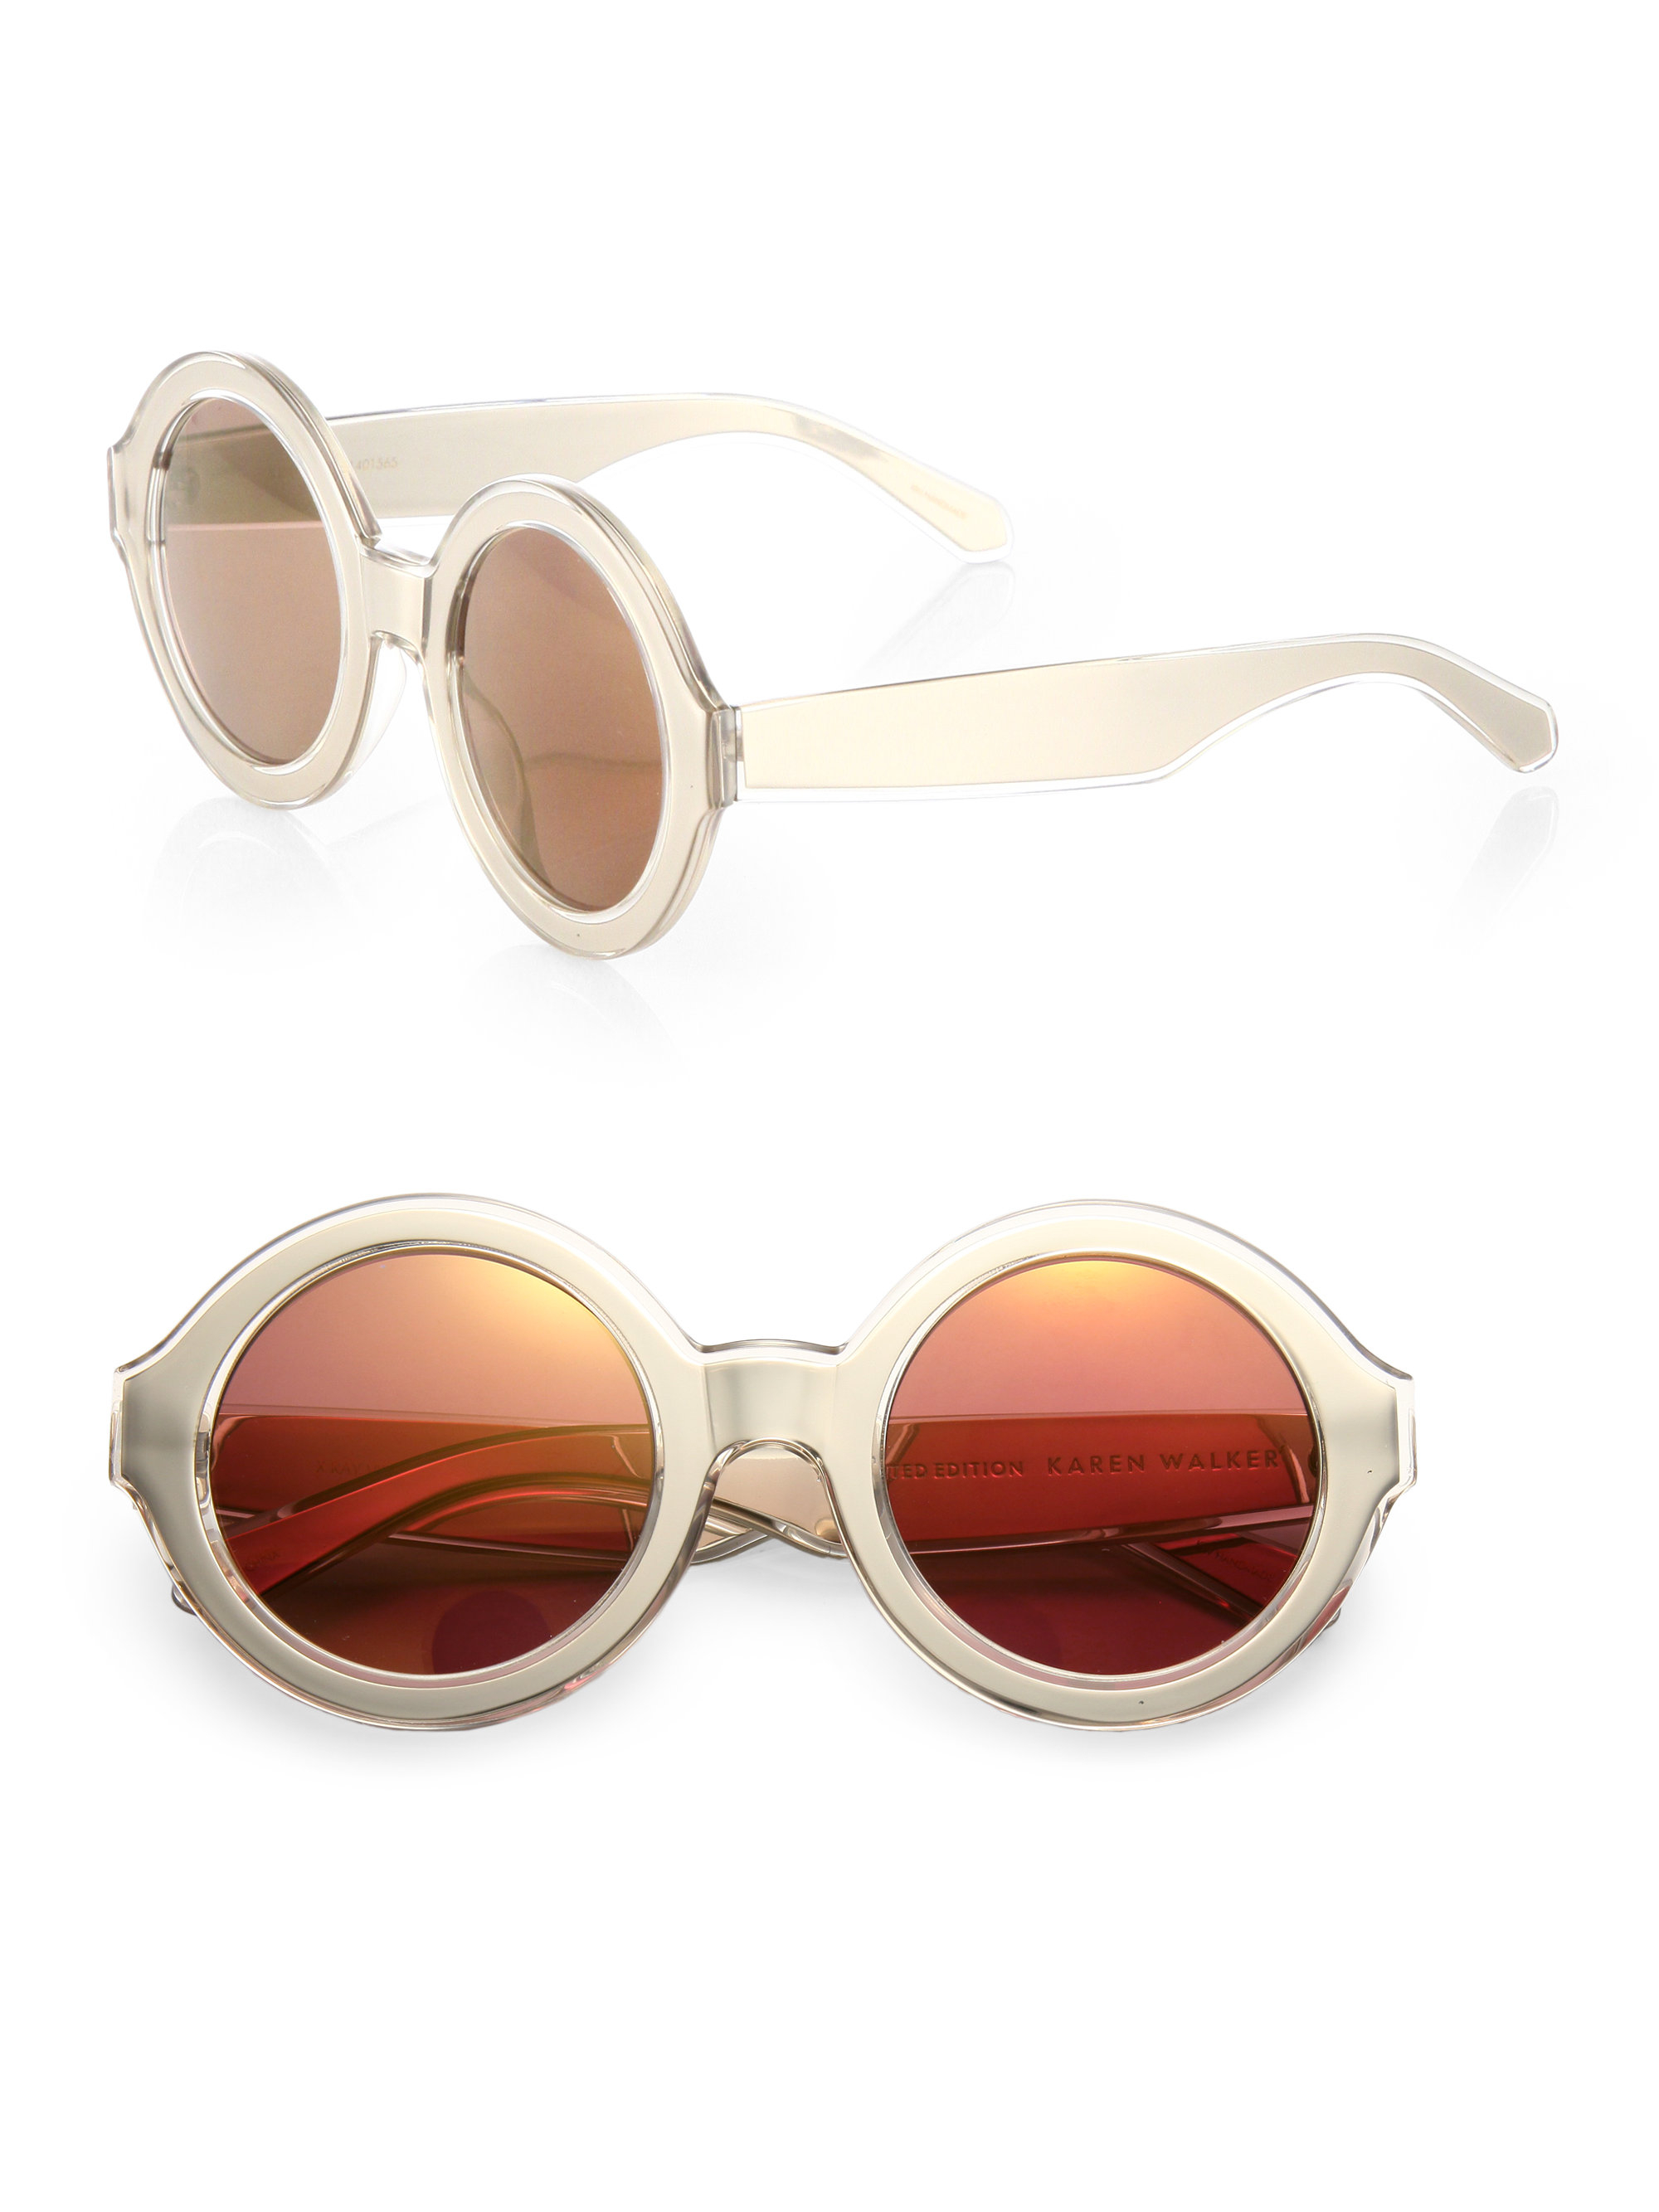 xray vision sunglasses